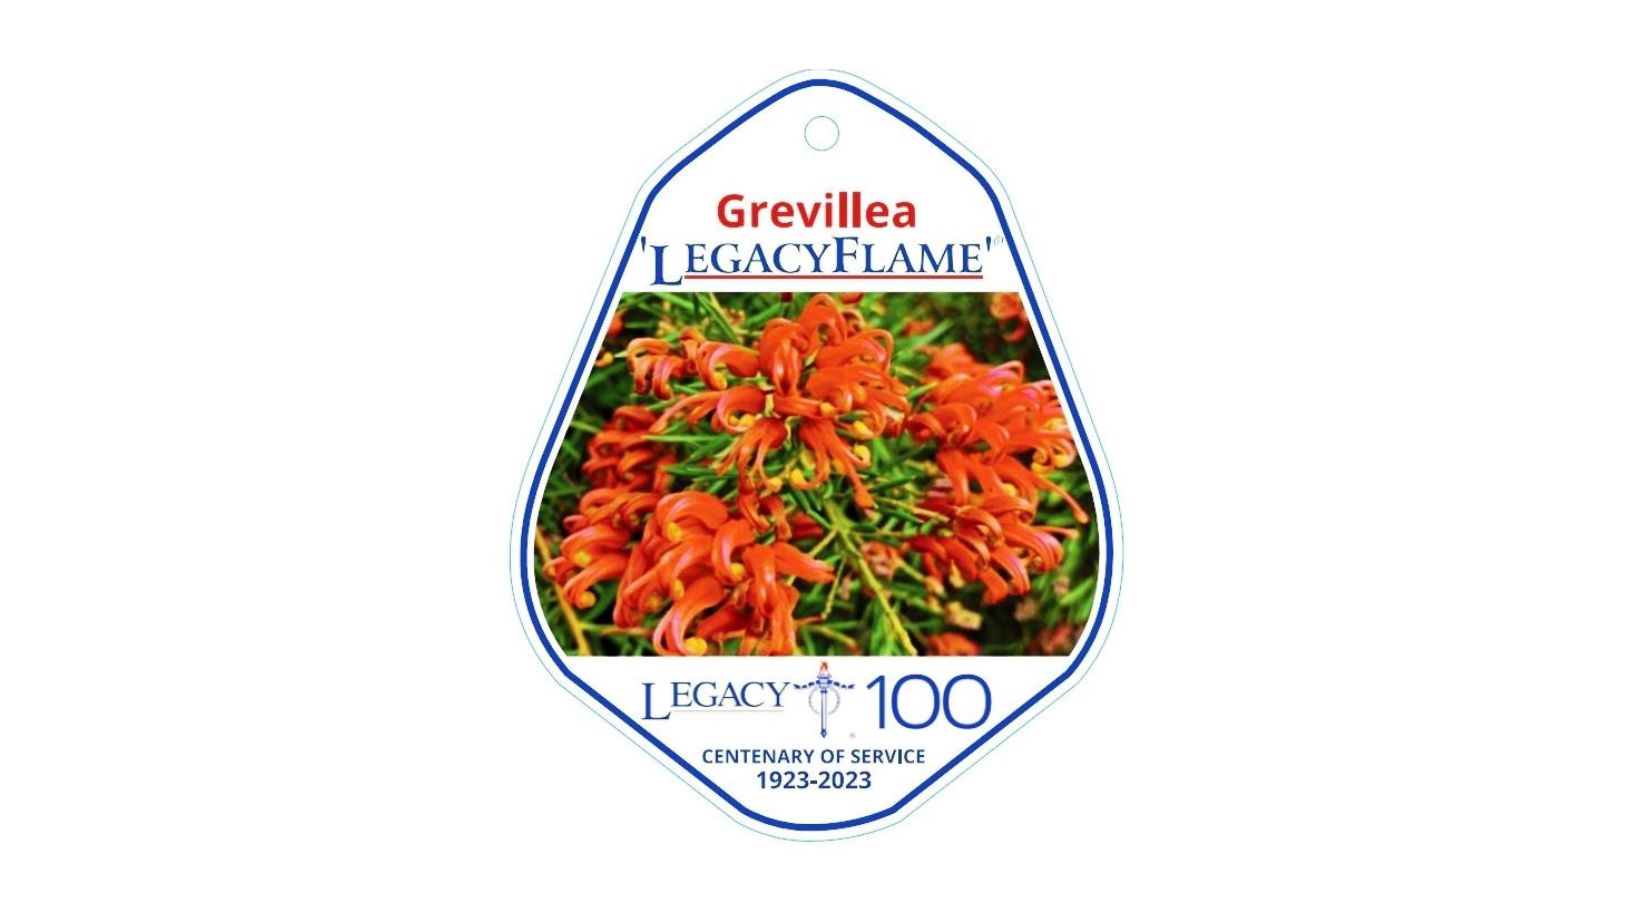 ‘LegacyFlame’ Grevillea Plant